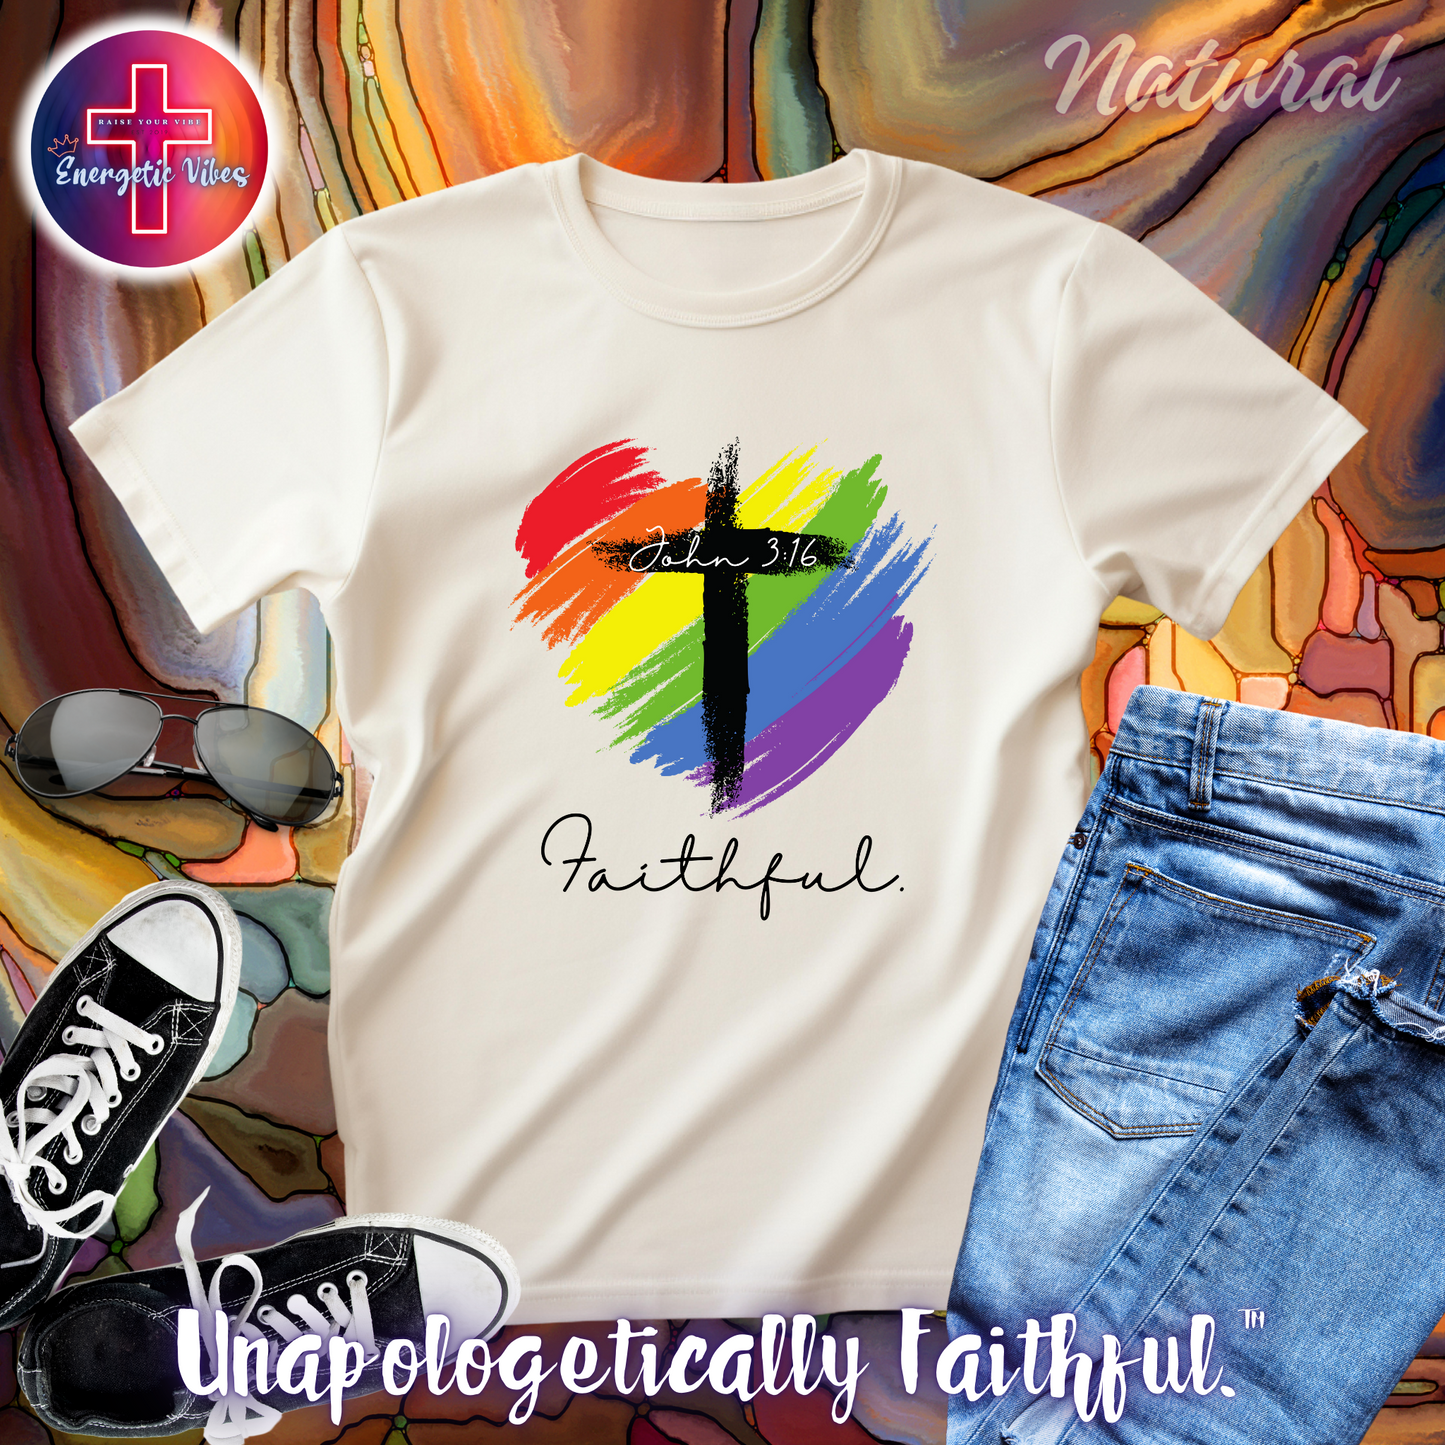 Faithful ~ John 3:16 Unisex Christian T-Shirt | Classic Style Modern Tee